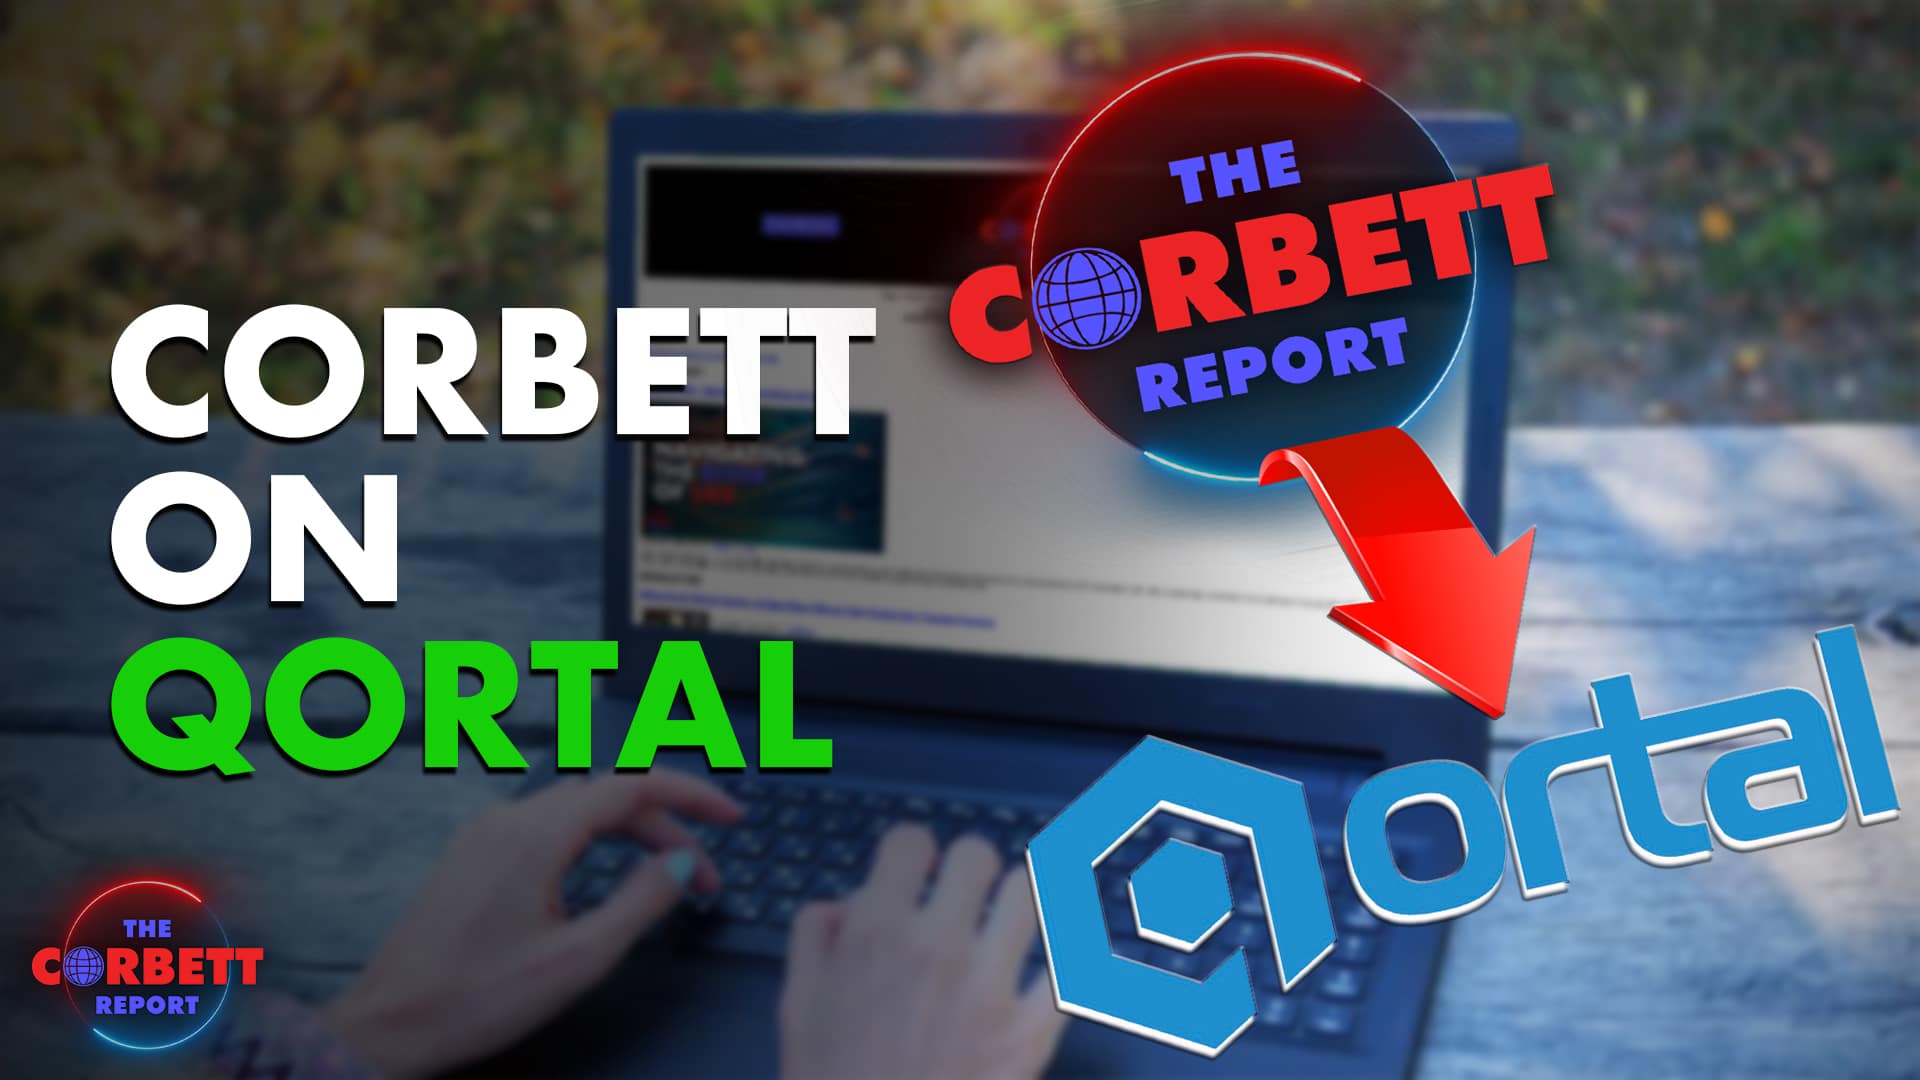 Corbett on Qortal – #SolutionsWatch